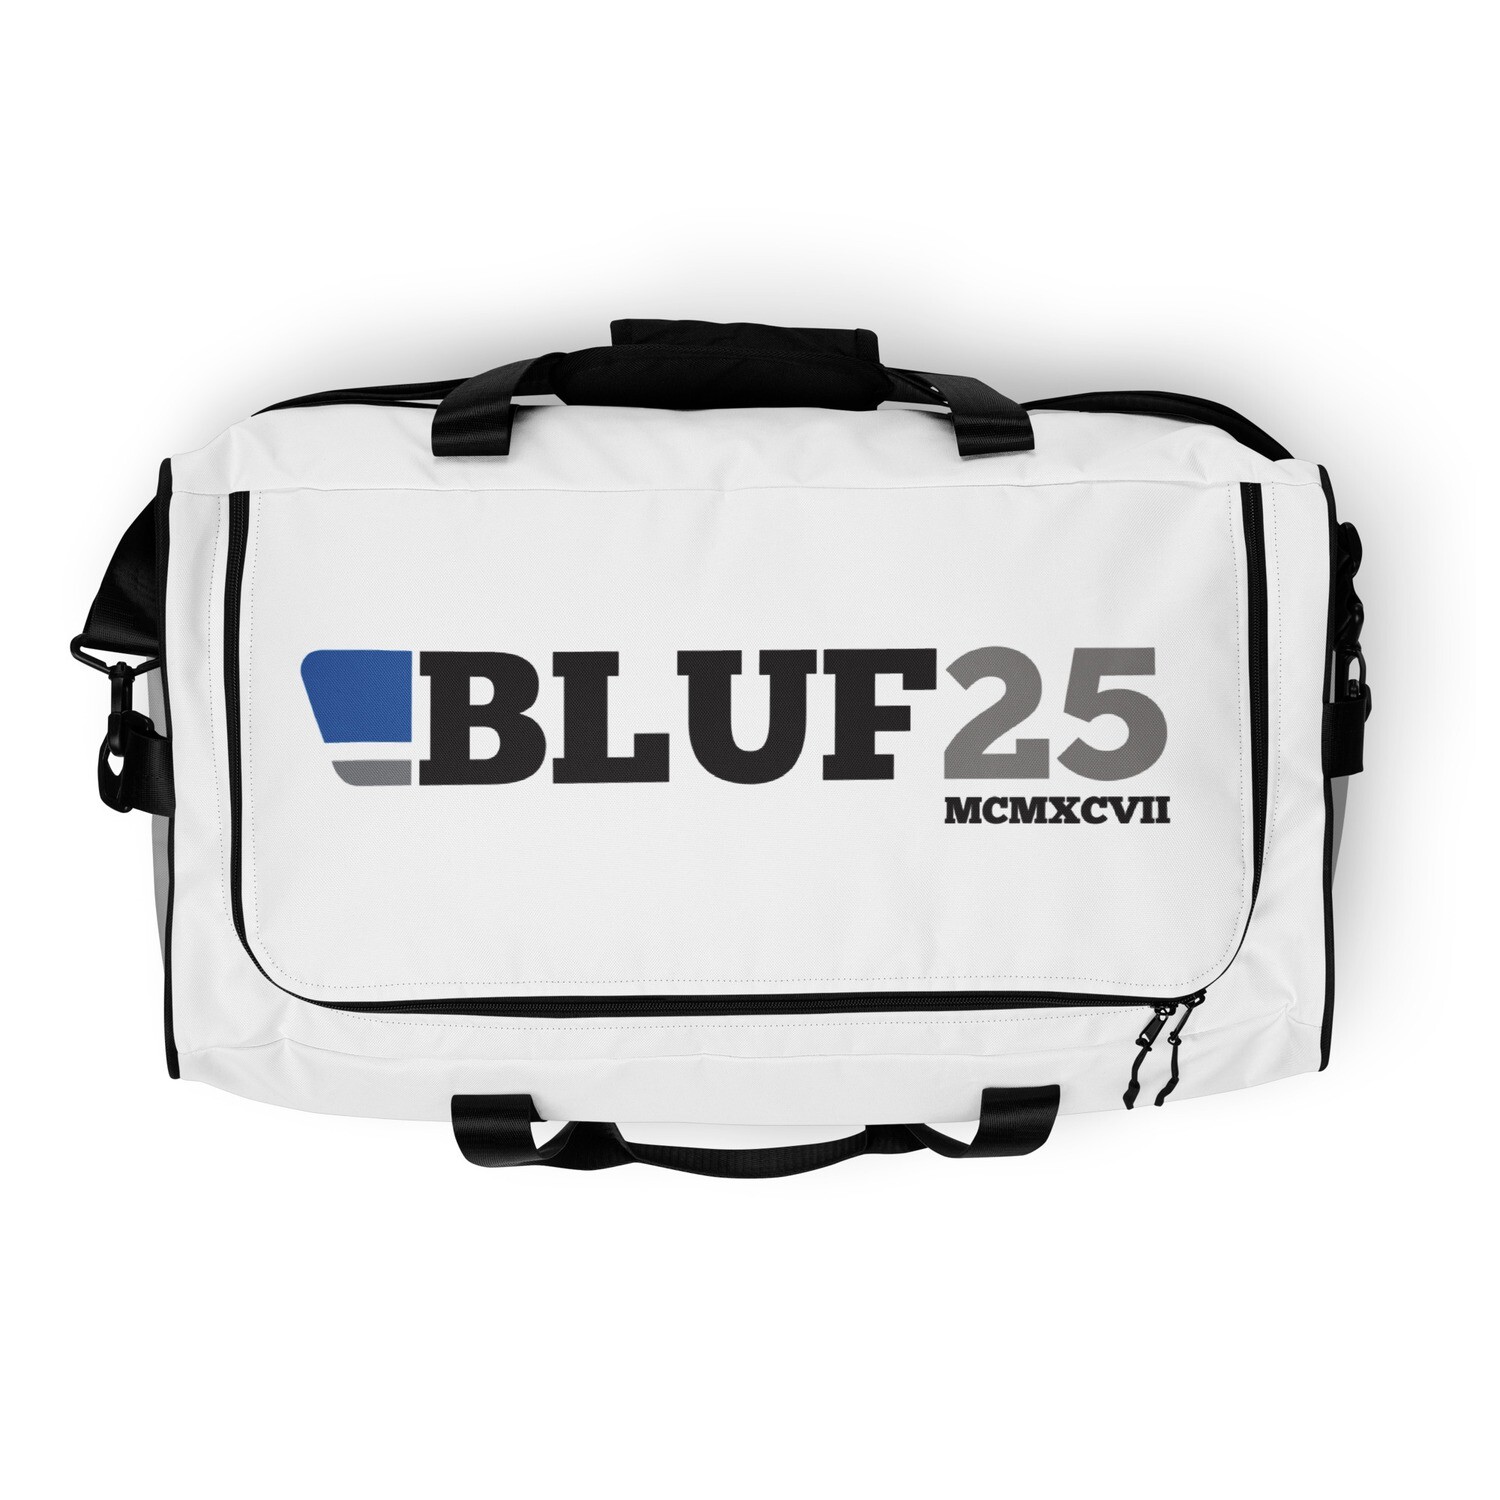 BLUF25 Duffle Bag - White